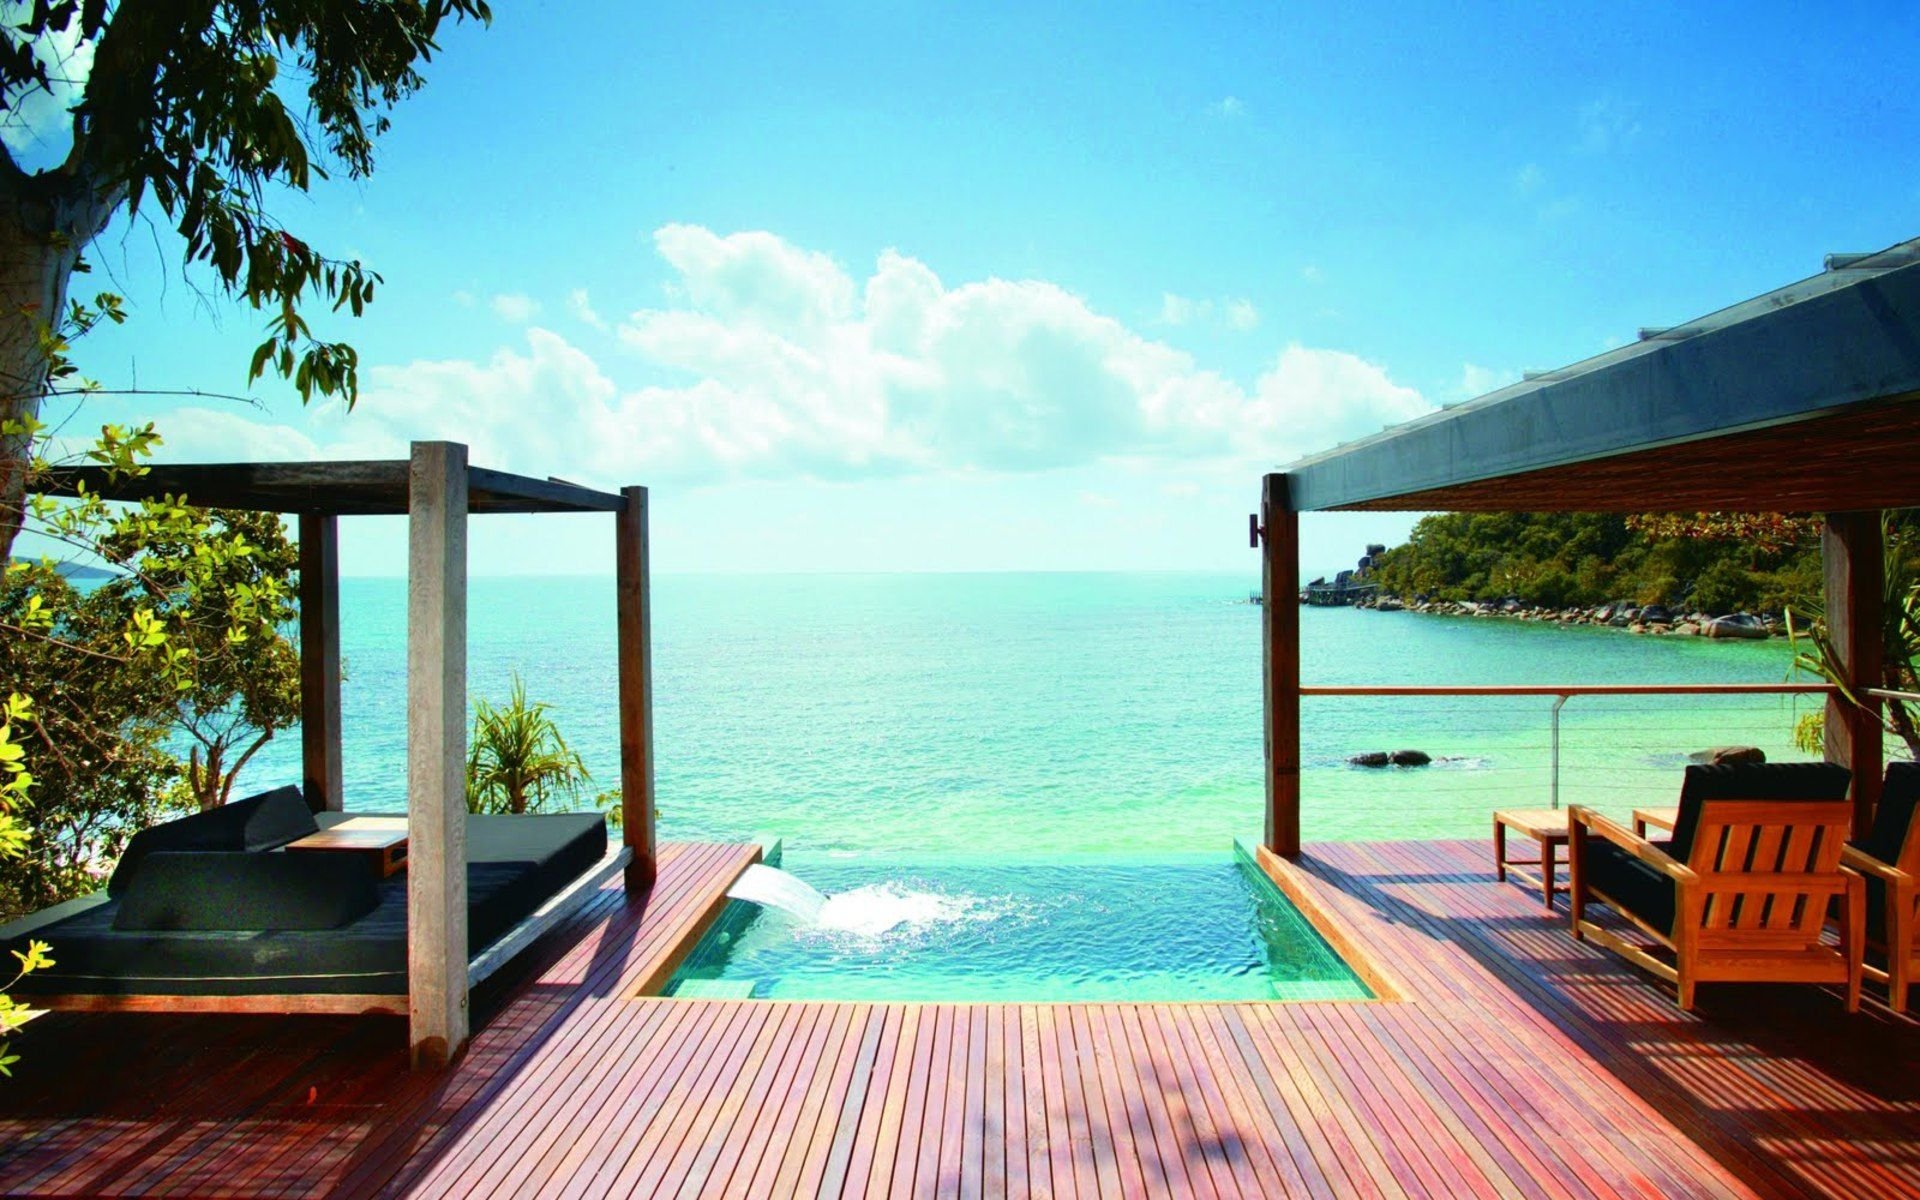 Отдых с видом на море. Bedarra Island Resort 5*Австралия. Терраса в Шри-Ланка. Вид на океан с террасы. Терраса на берегу моря.